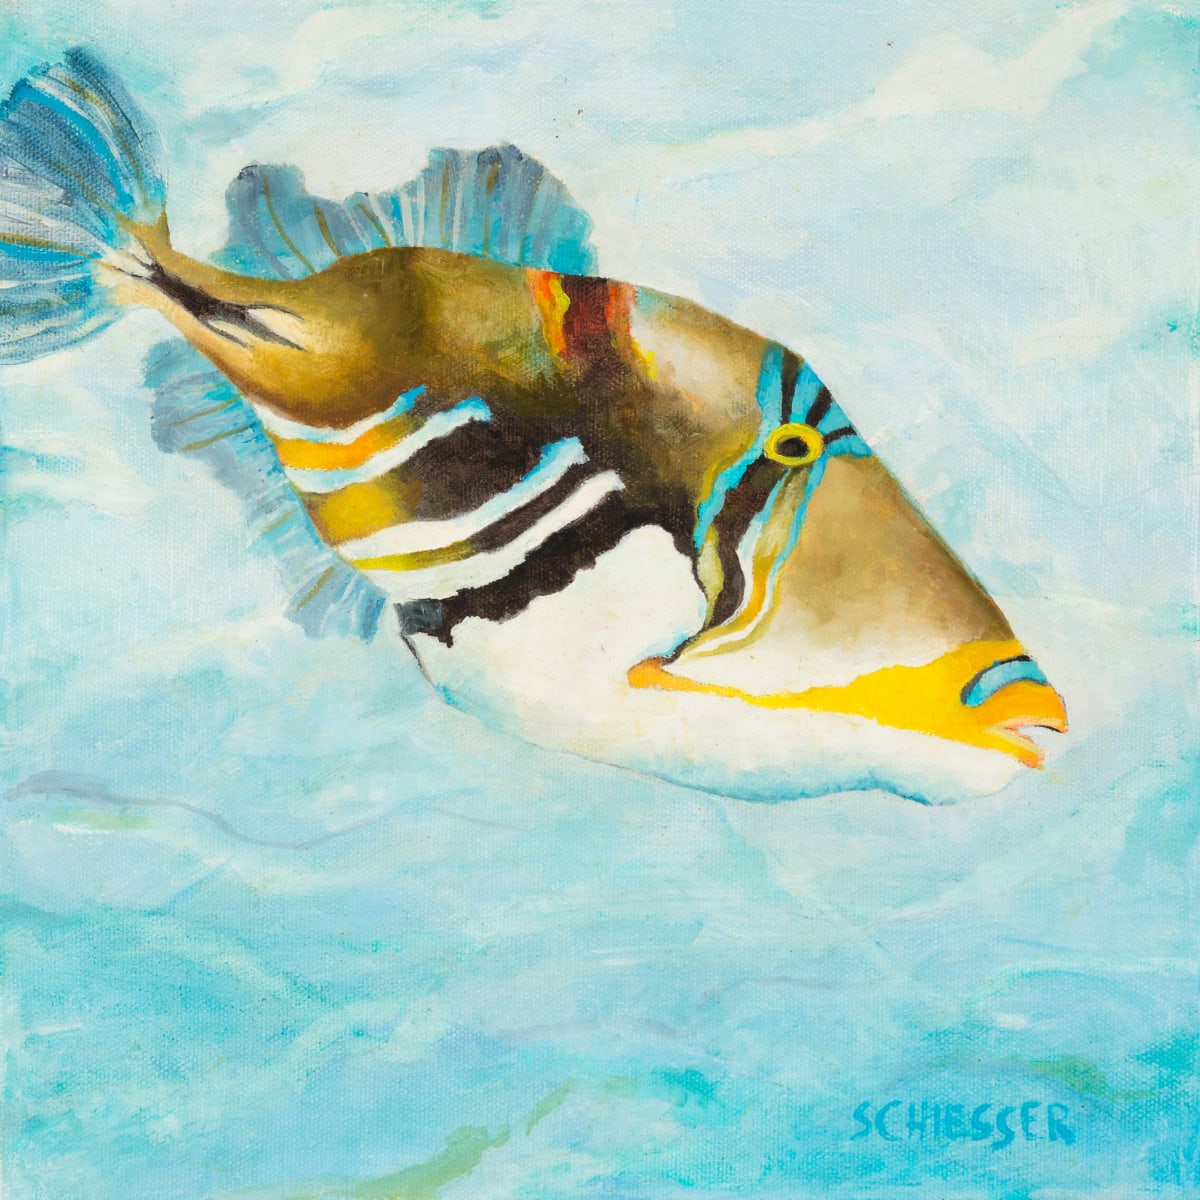 Humuhumunukunukuapua'a  (Reef Trigger Fish) by Susan Schiesser 